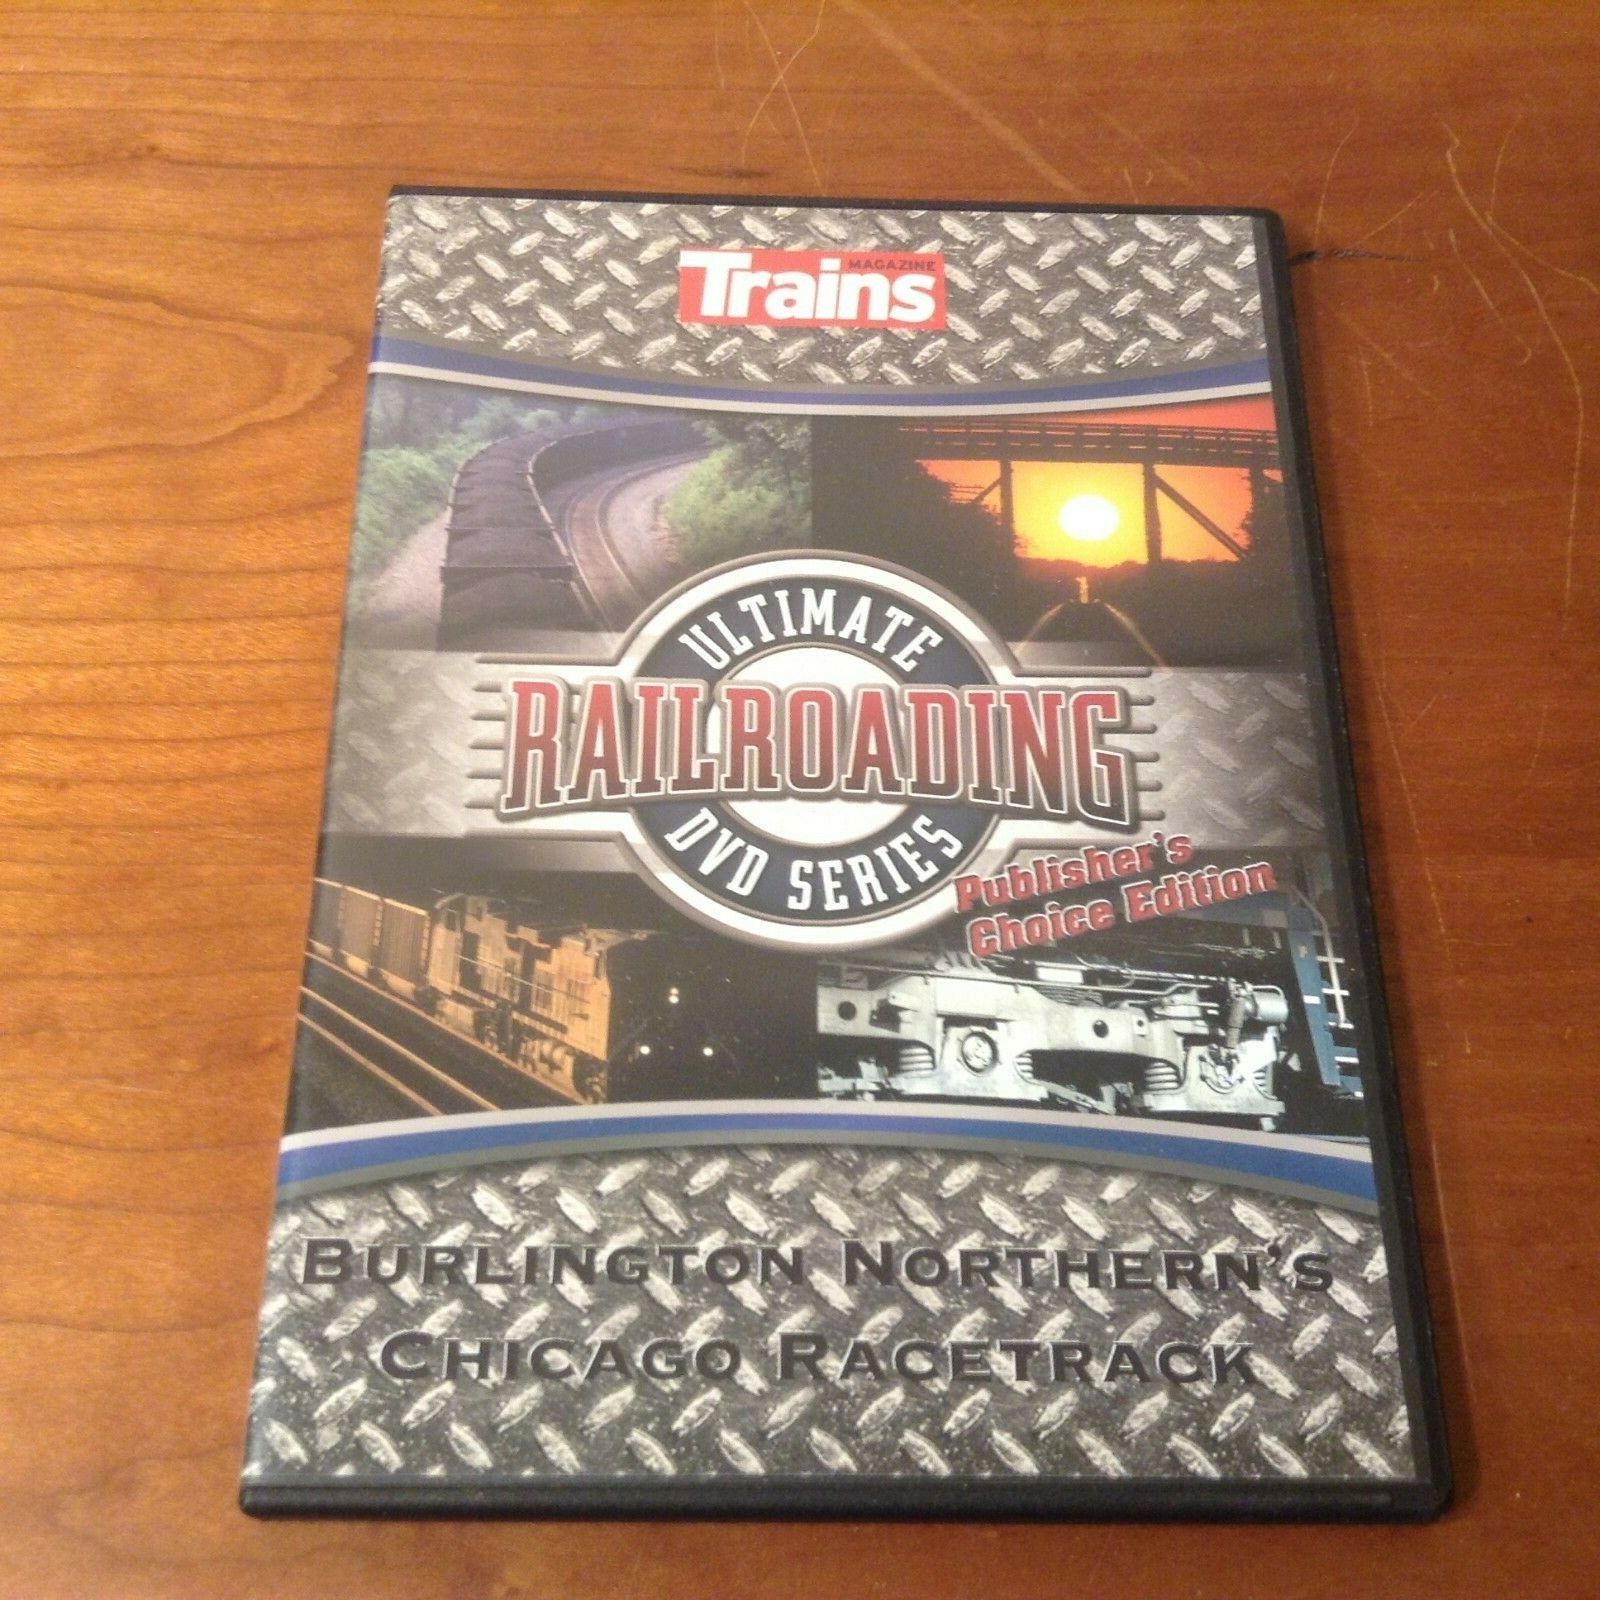 Trains Railroading DVD Series - Burlington Northeastern Chicago Racetrack